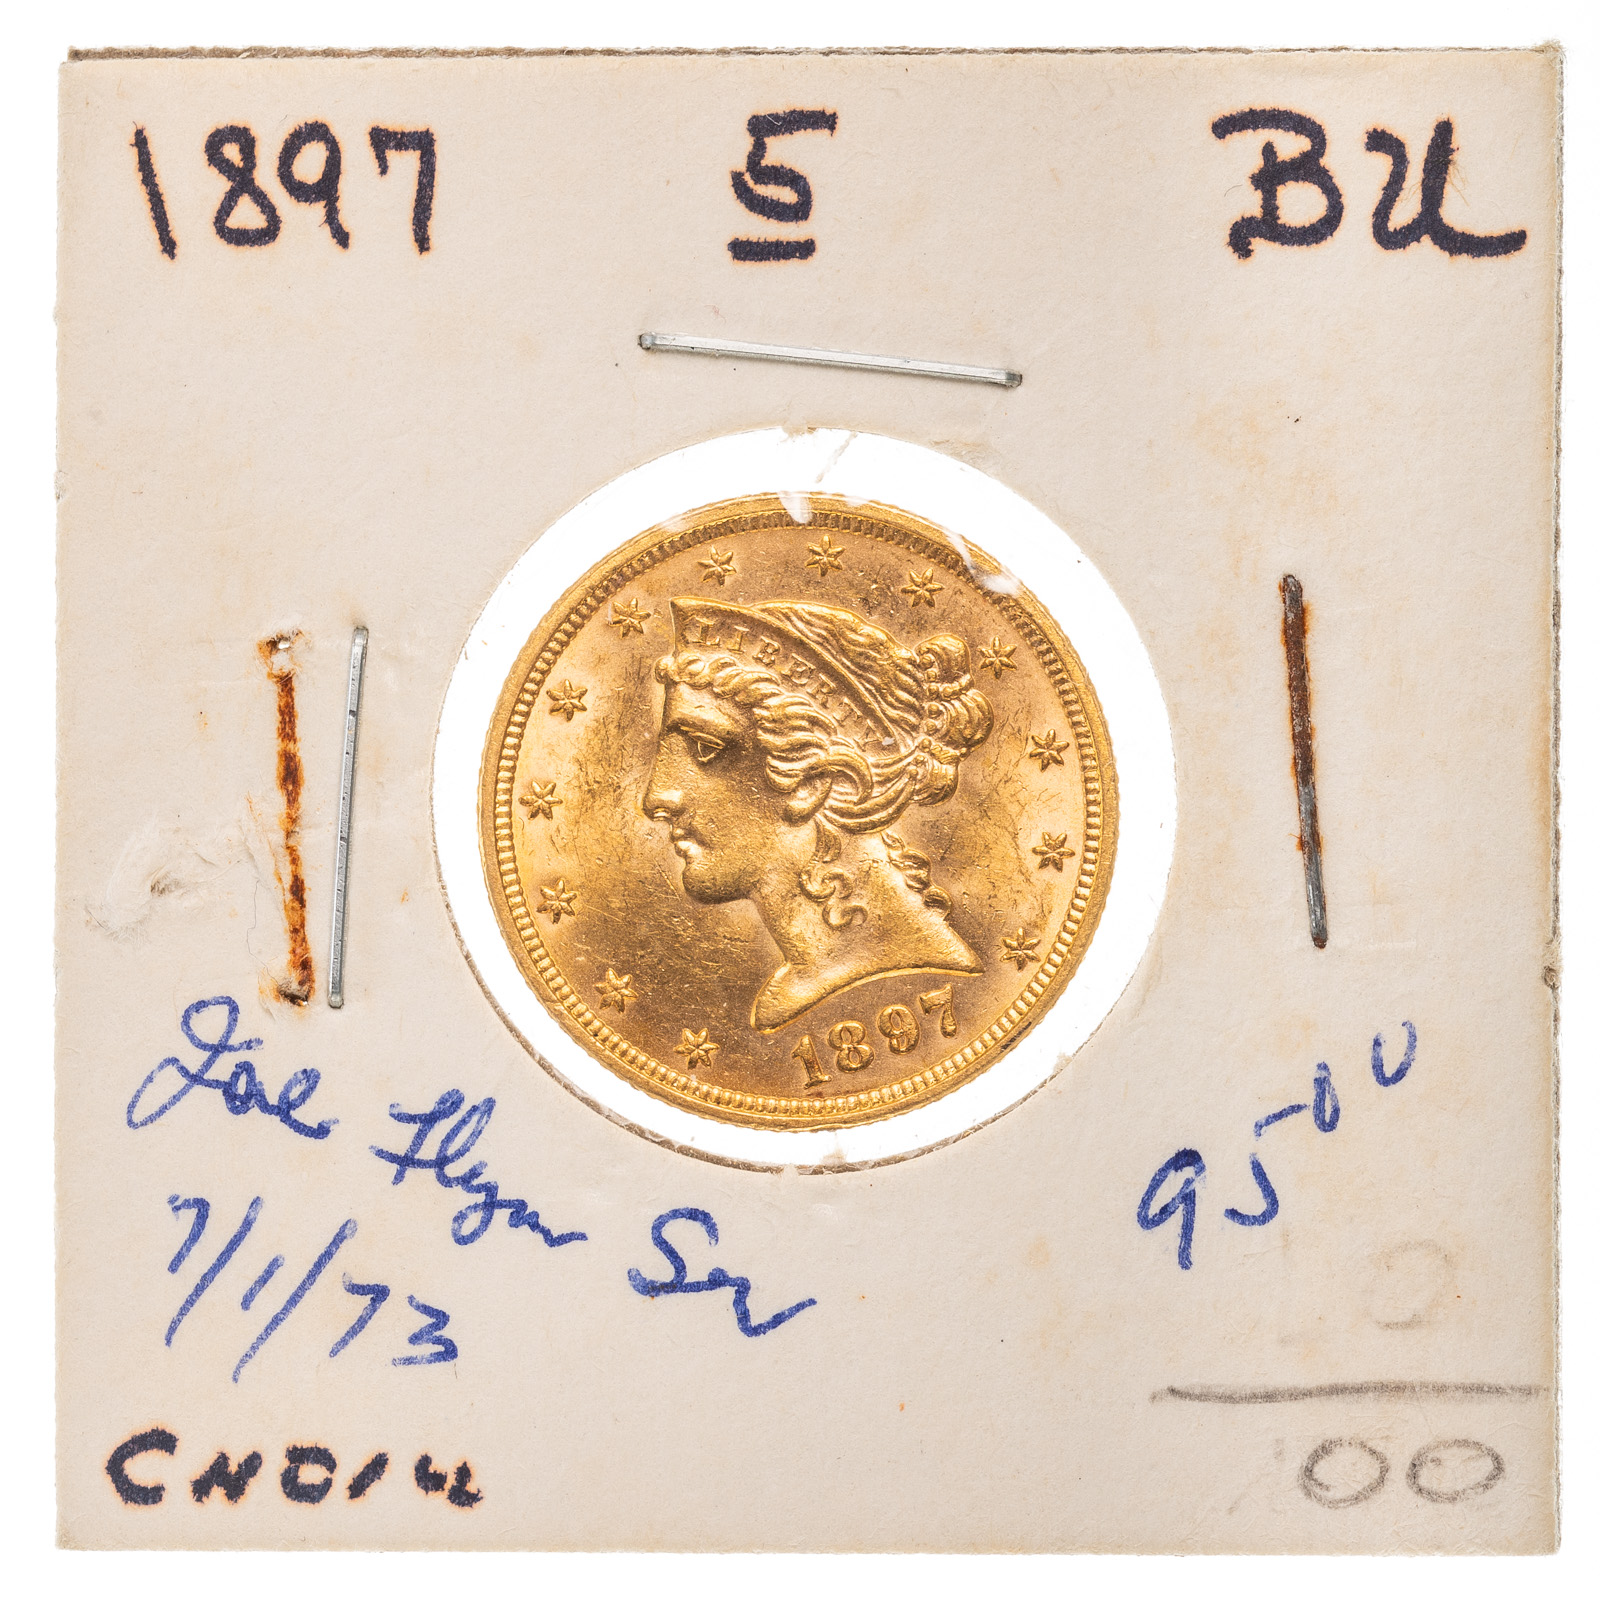 1897 $5 LIBERTY GOLD HALF EAGLE